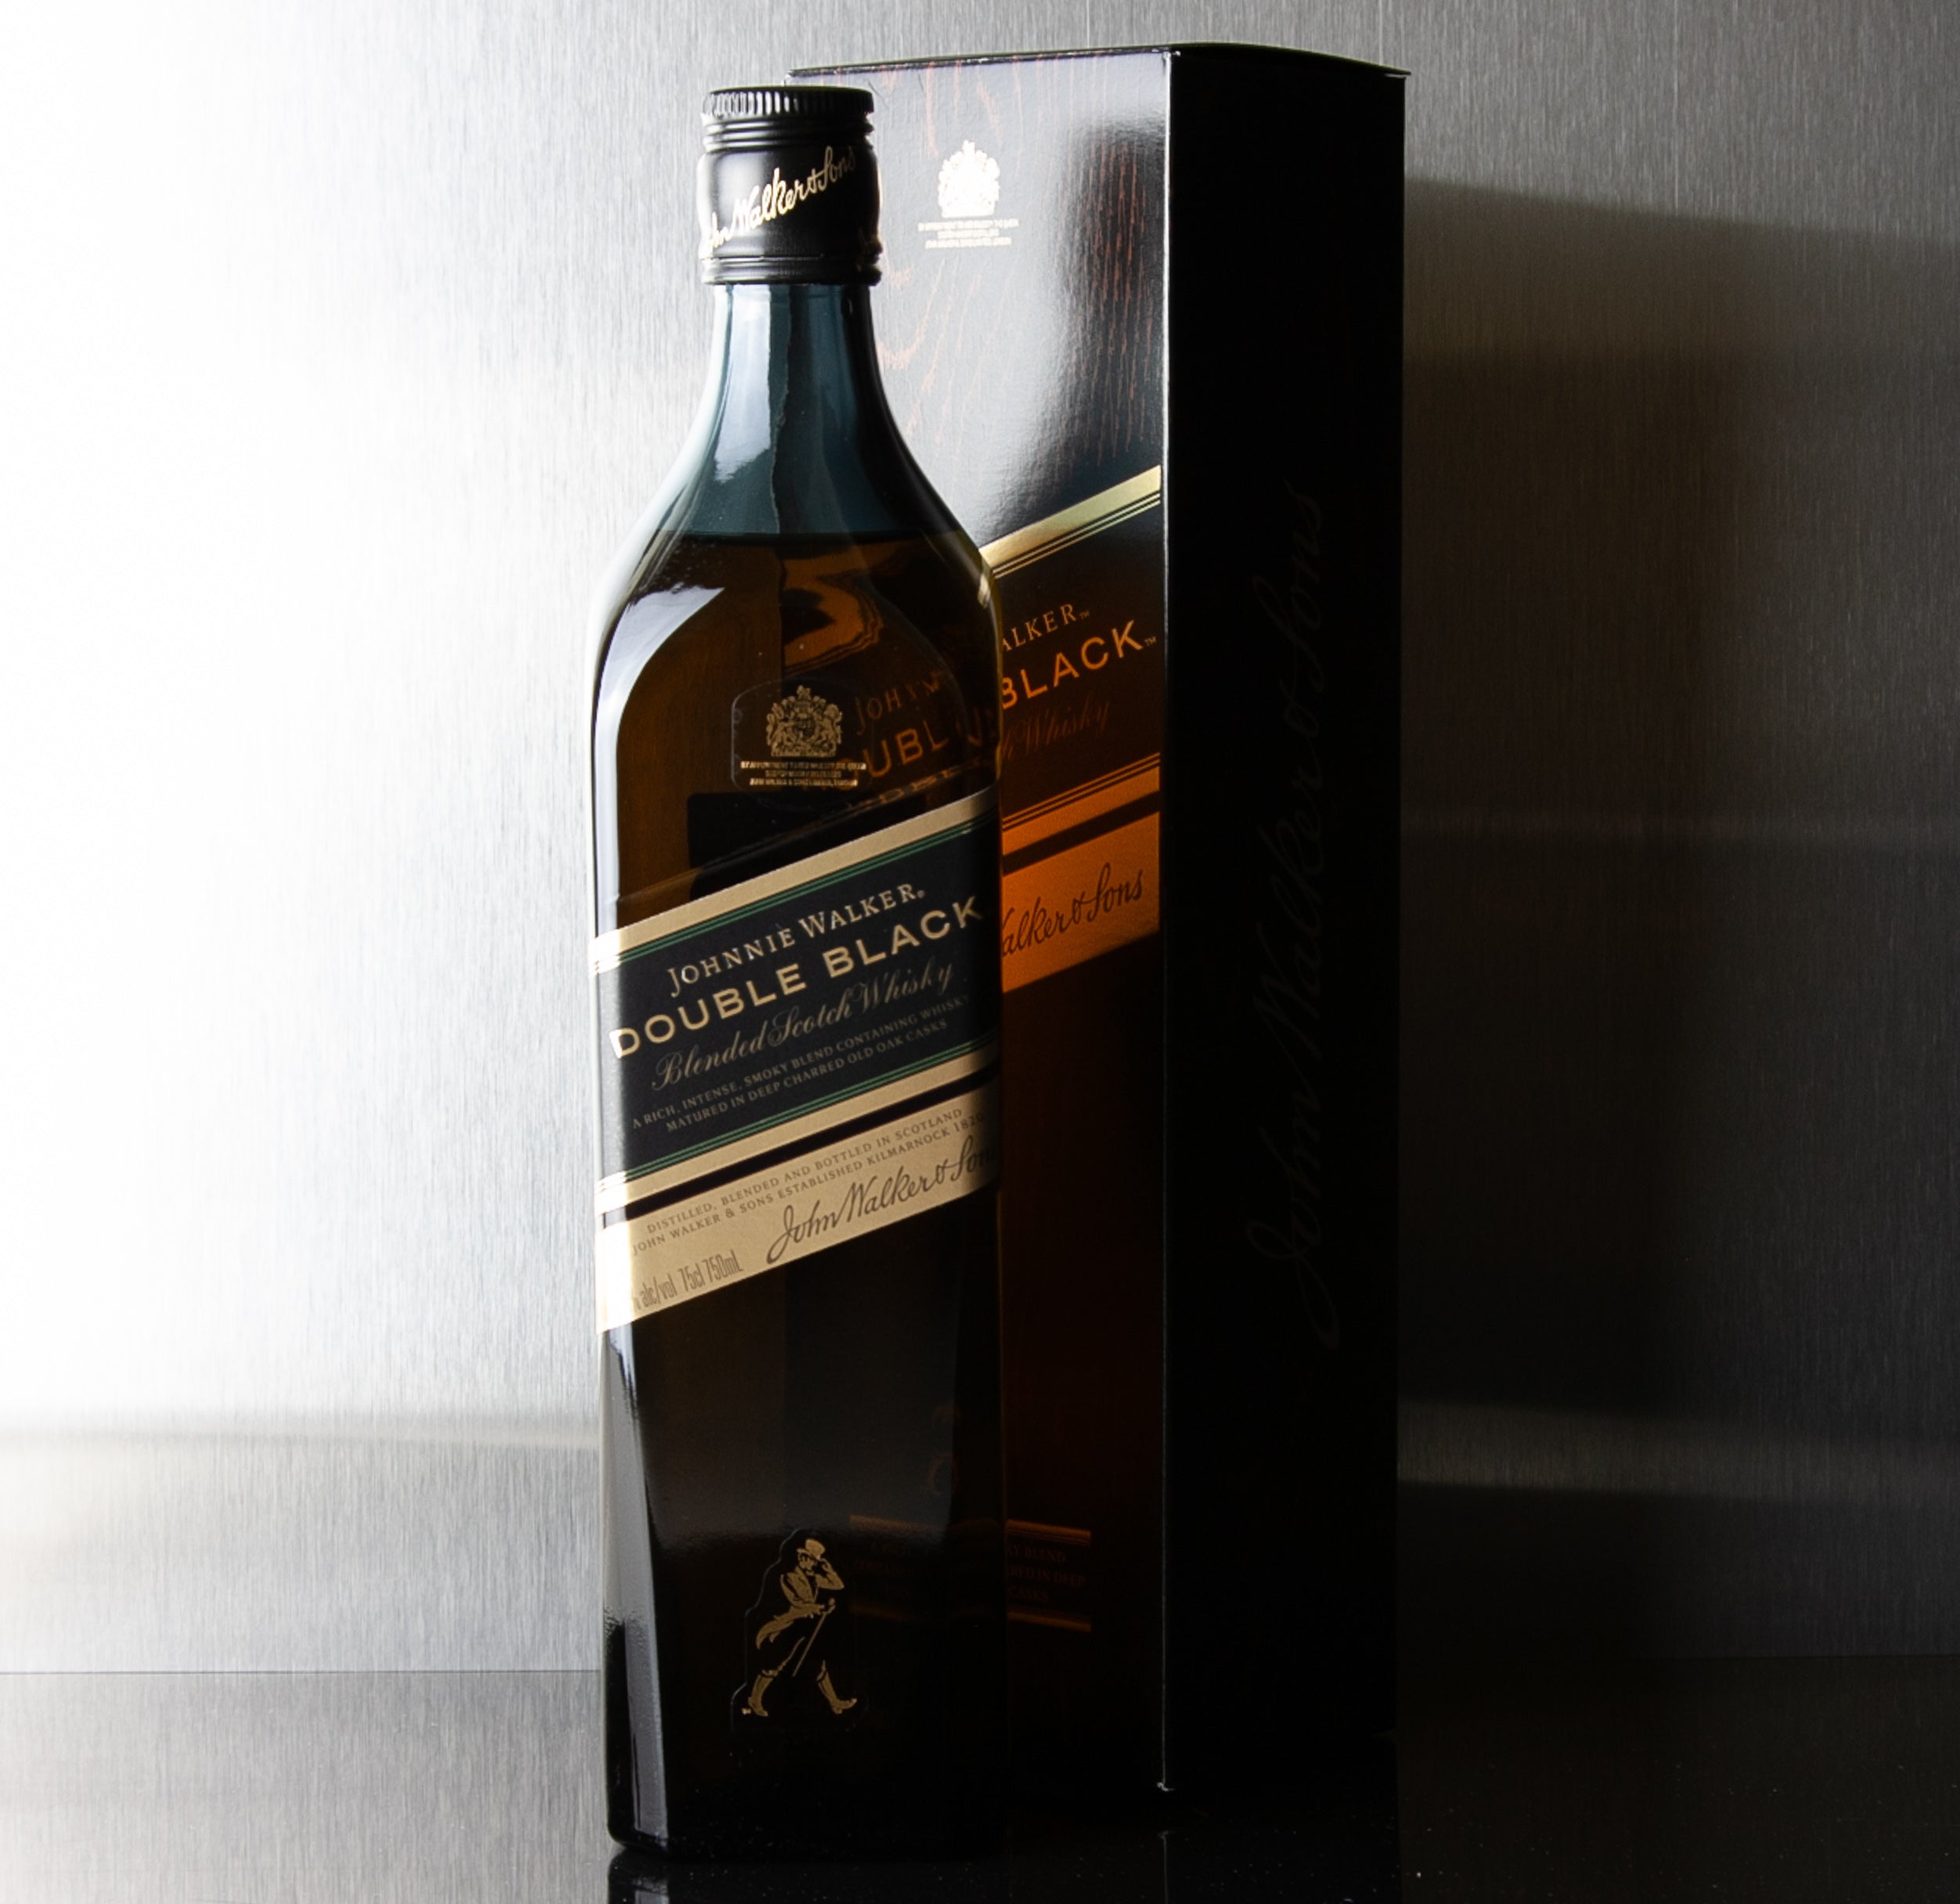 Johnnie Walker Double Black Scotch Whisky